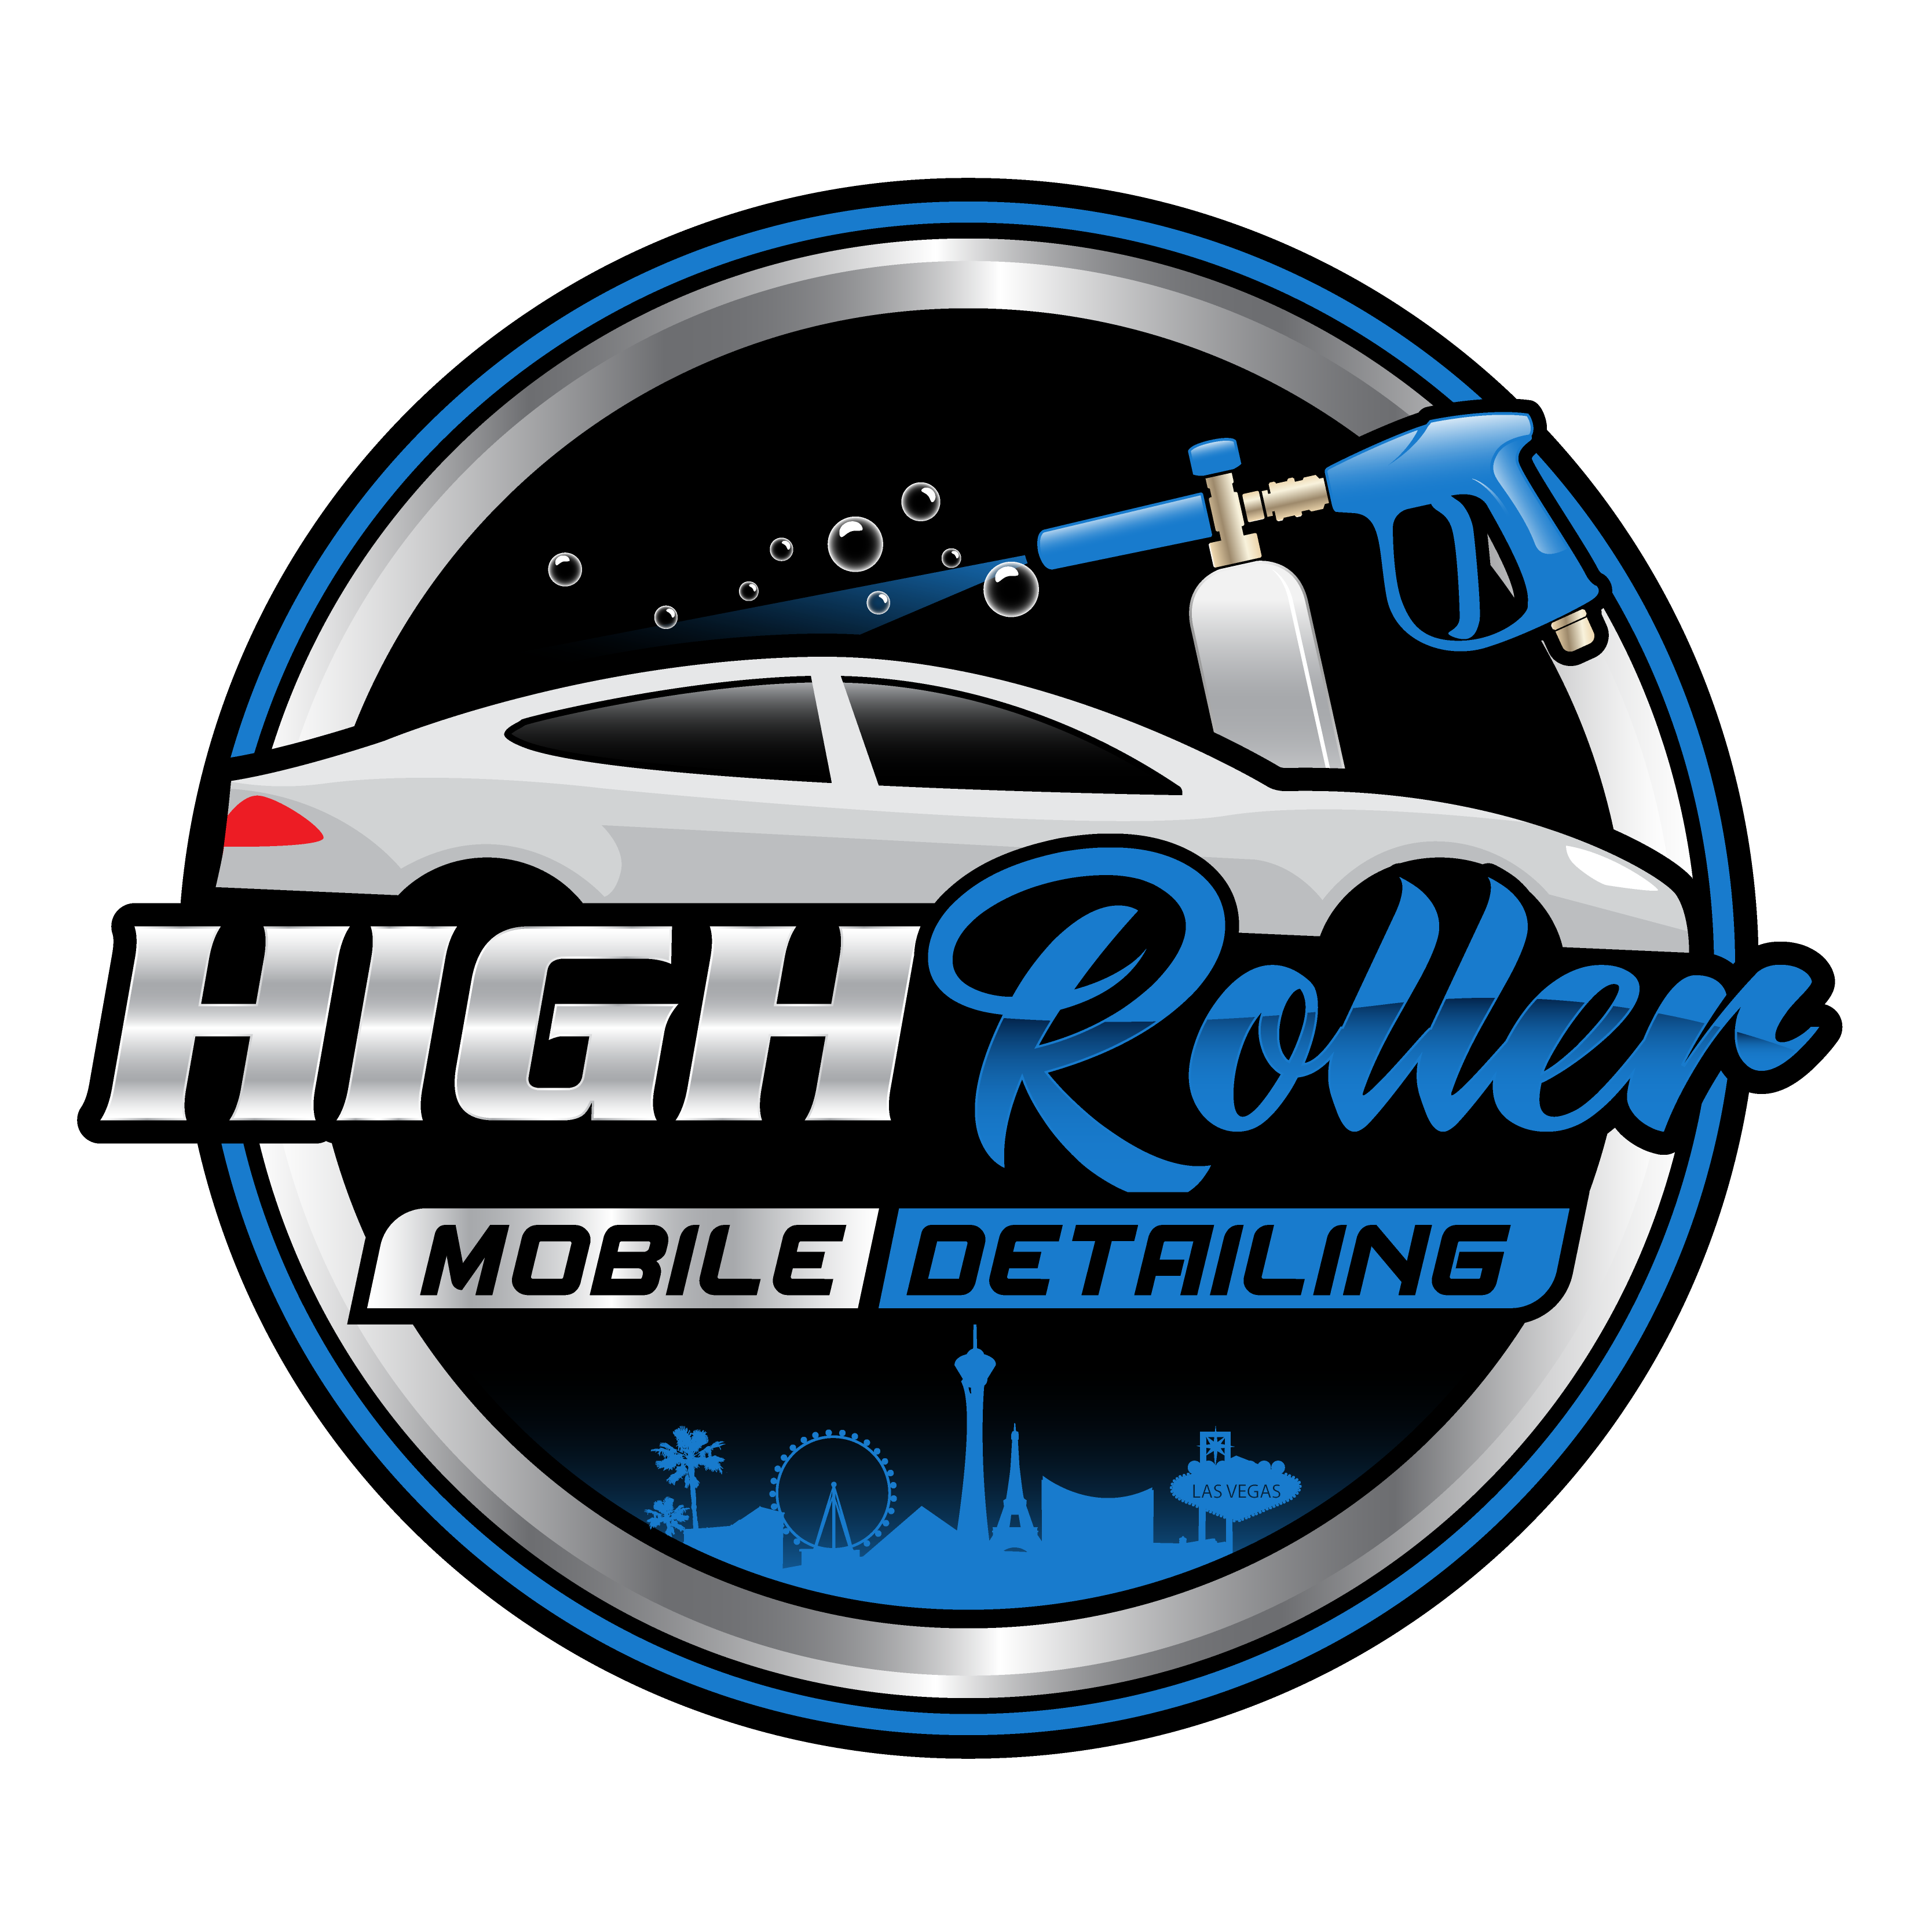 High Roller Mobile Detailing logo